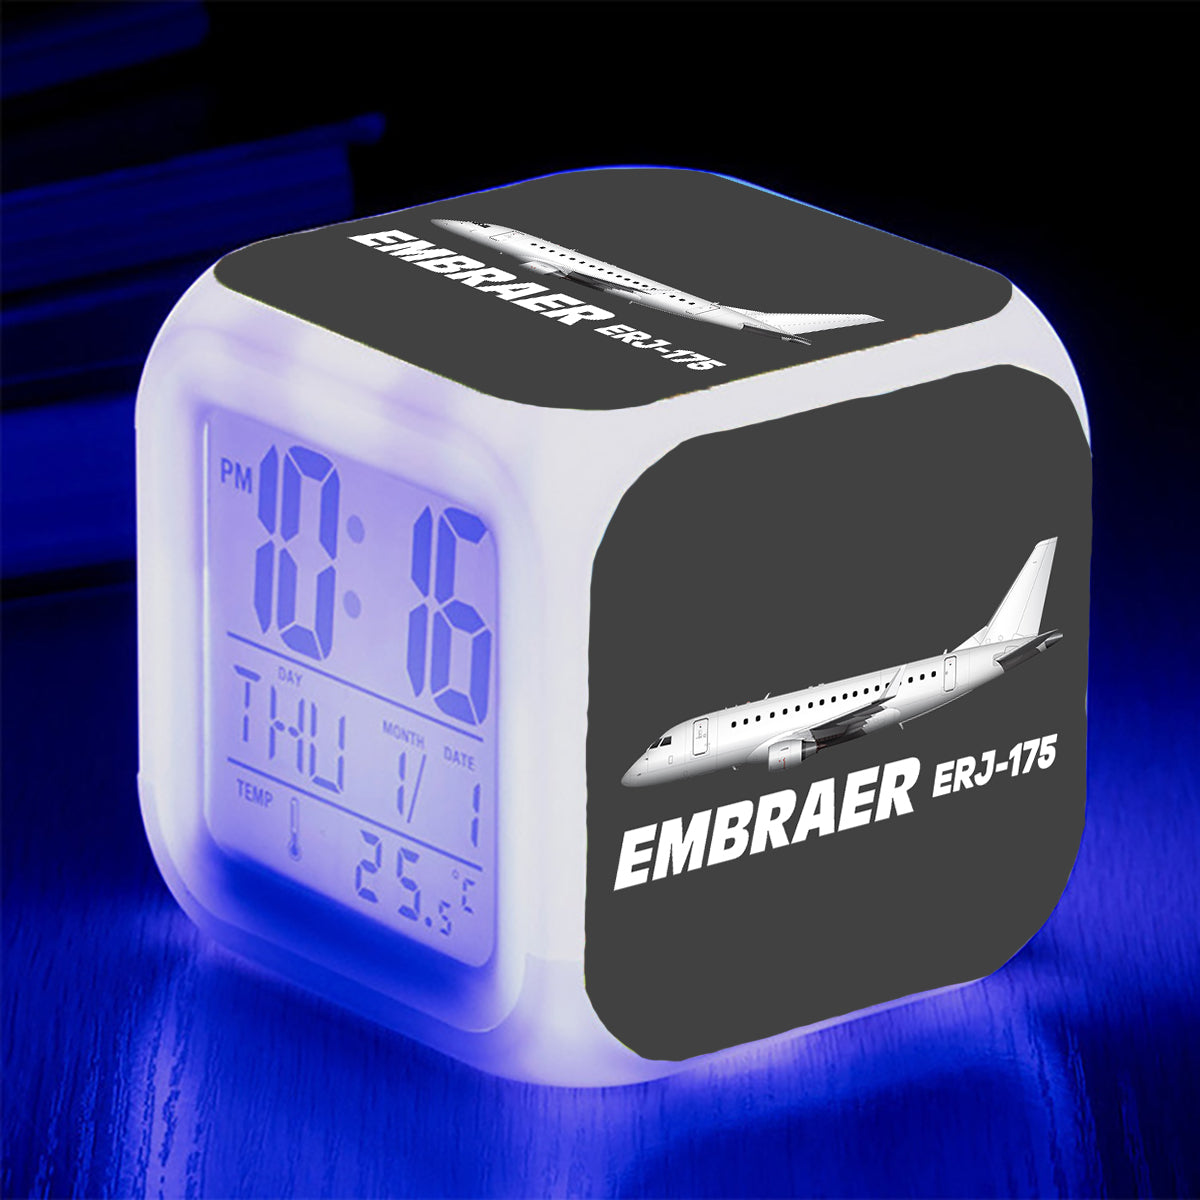 The Embraer ERJ-175 Designed "7 Colour" Digital Alarm Clock